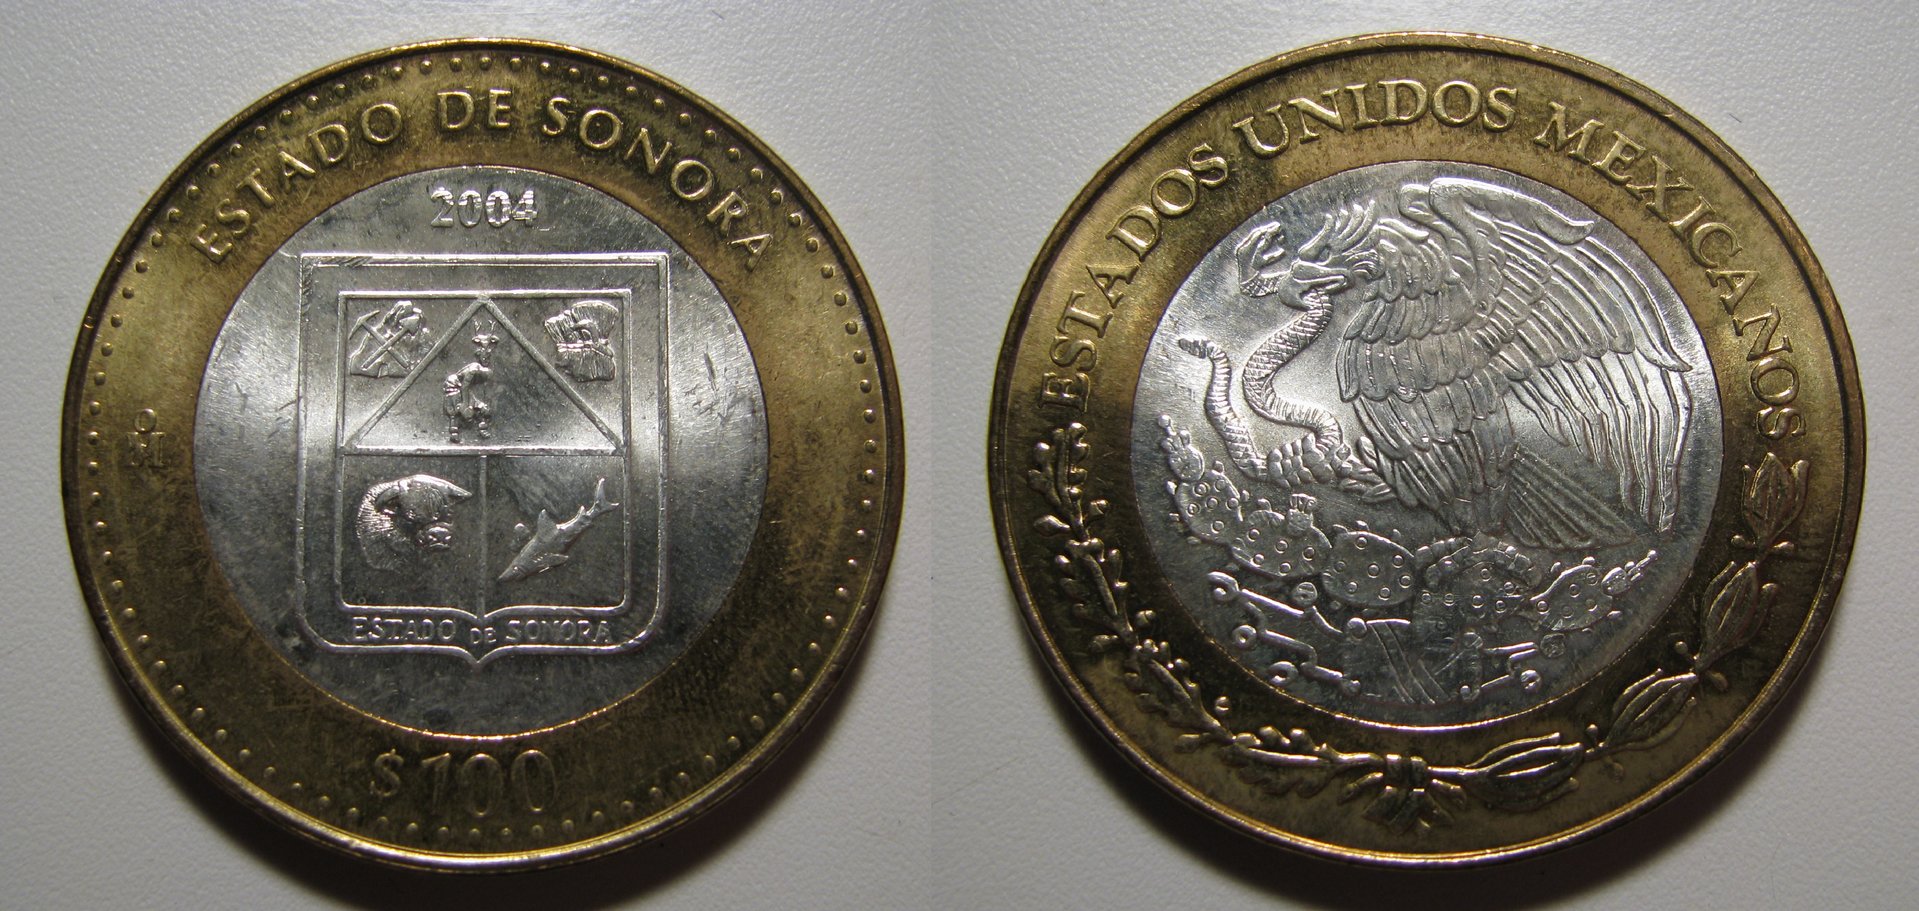 2004 Mexico 100 Pesos Sonora.jpg